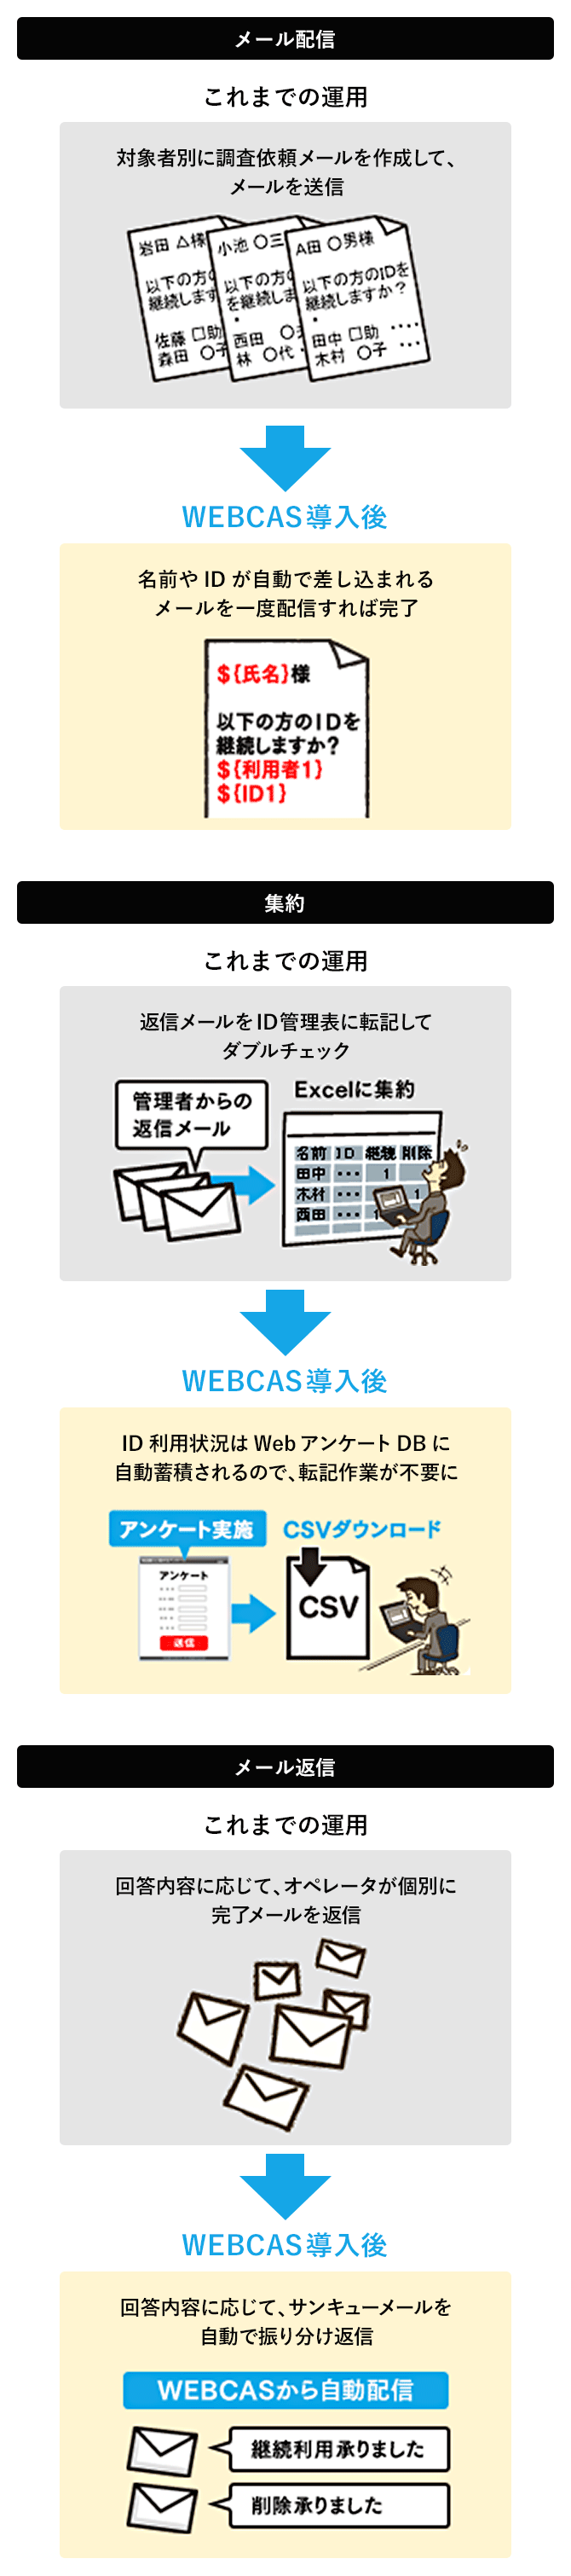 WEBCASシリーズの導入による大学のID管理業務の改善イメージ